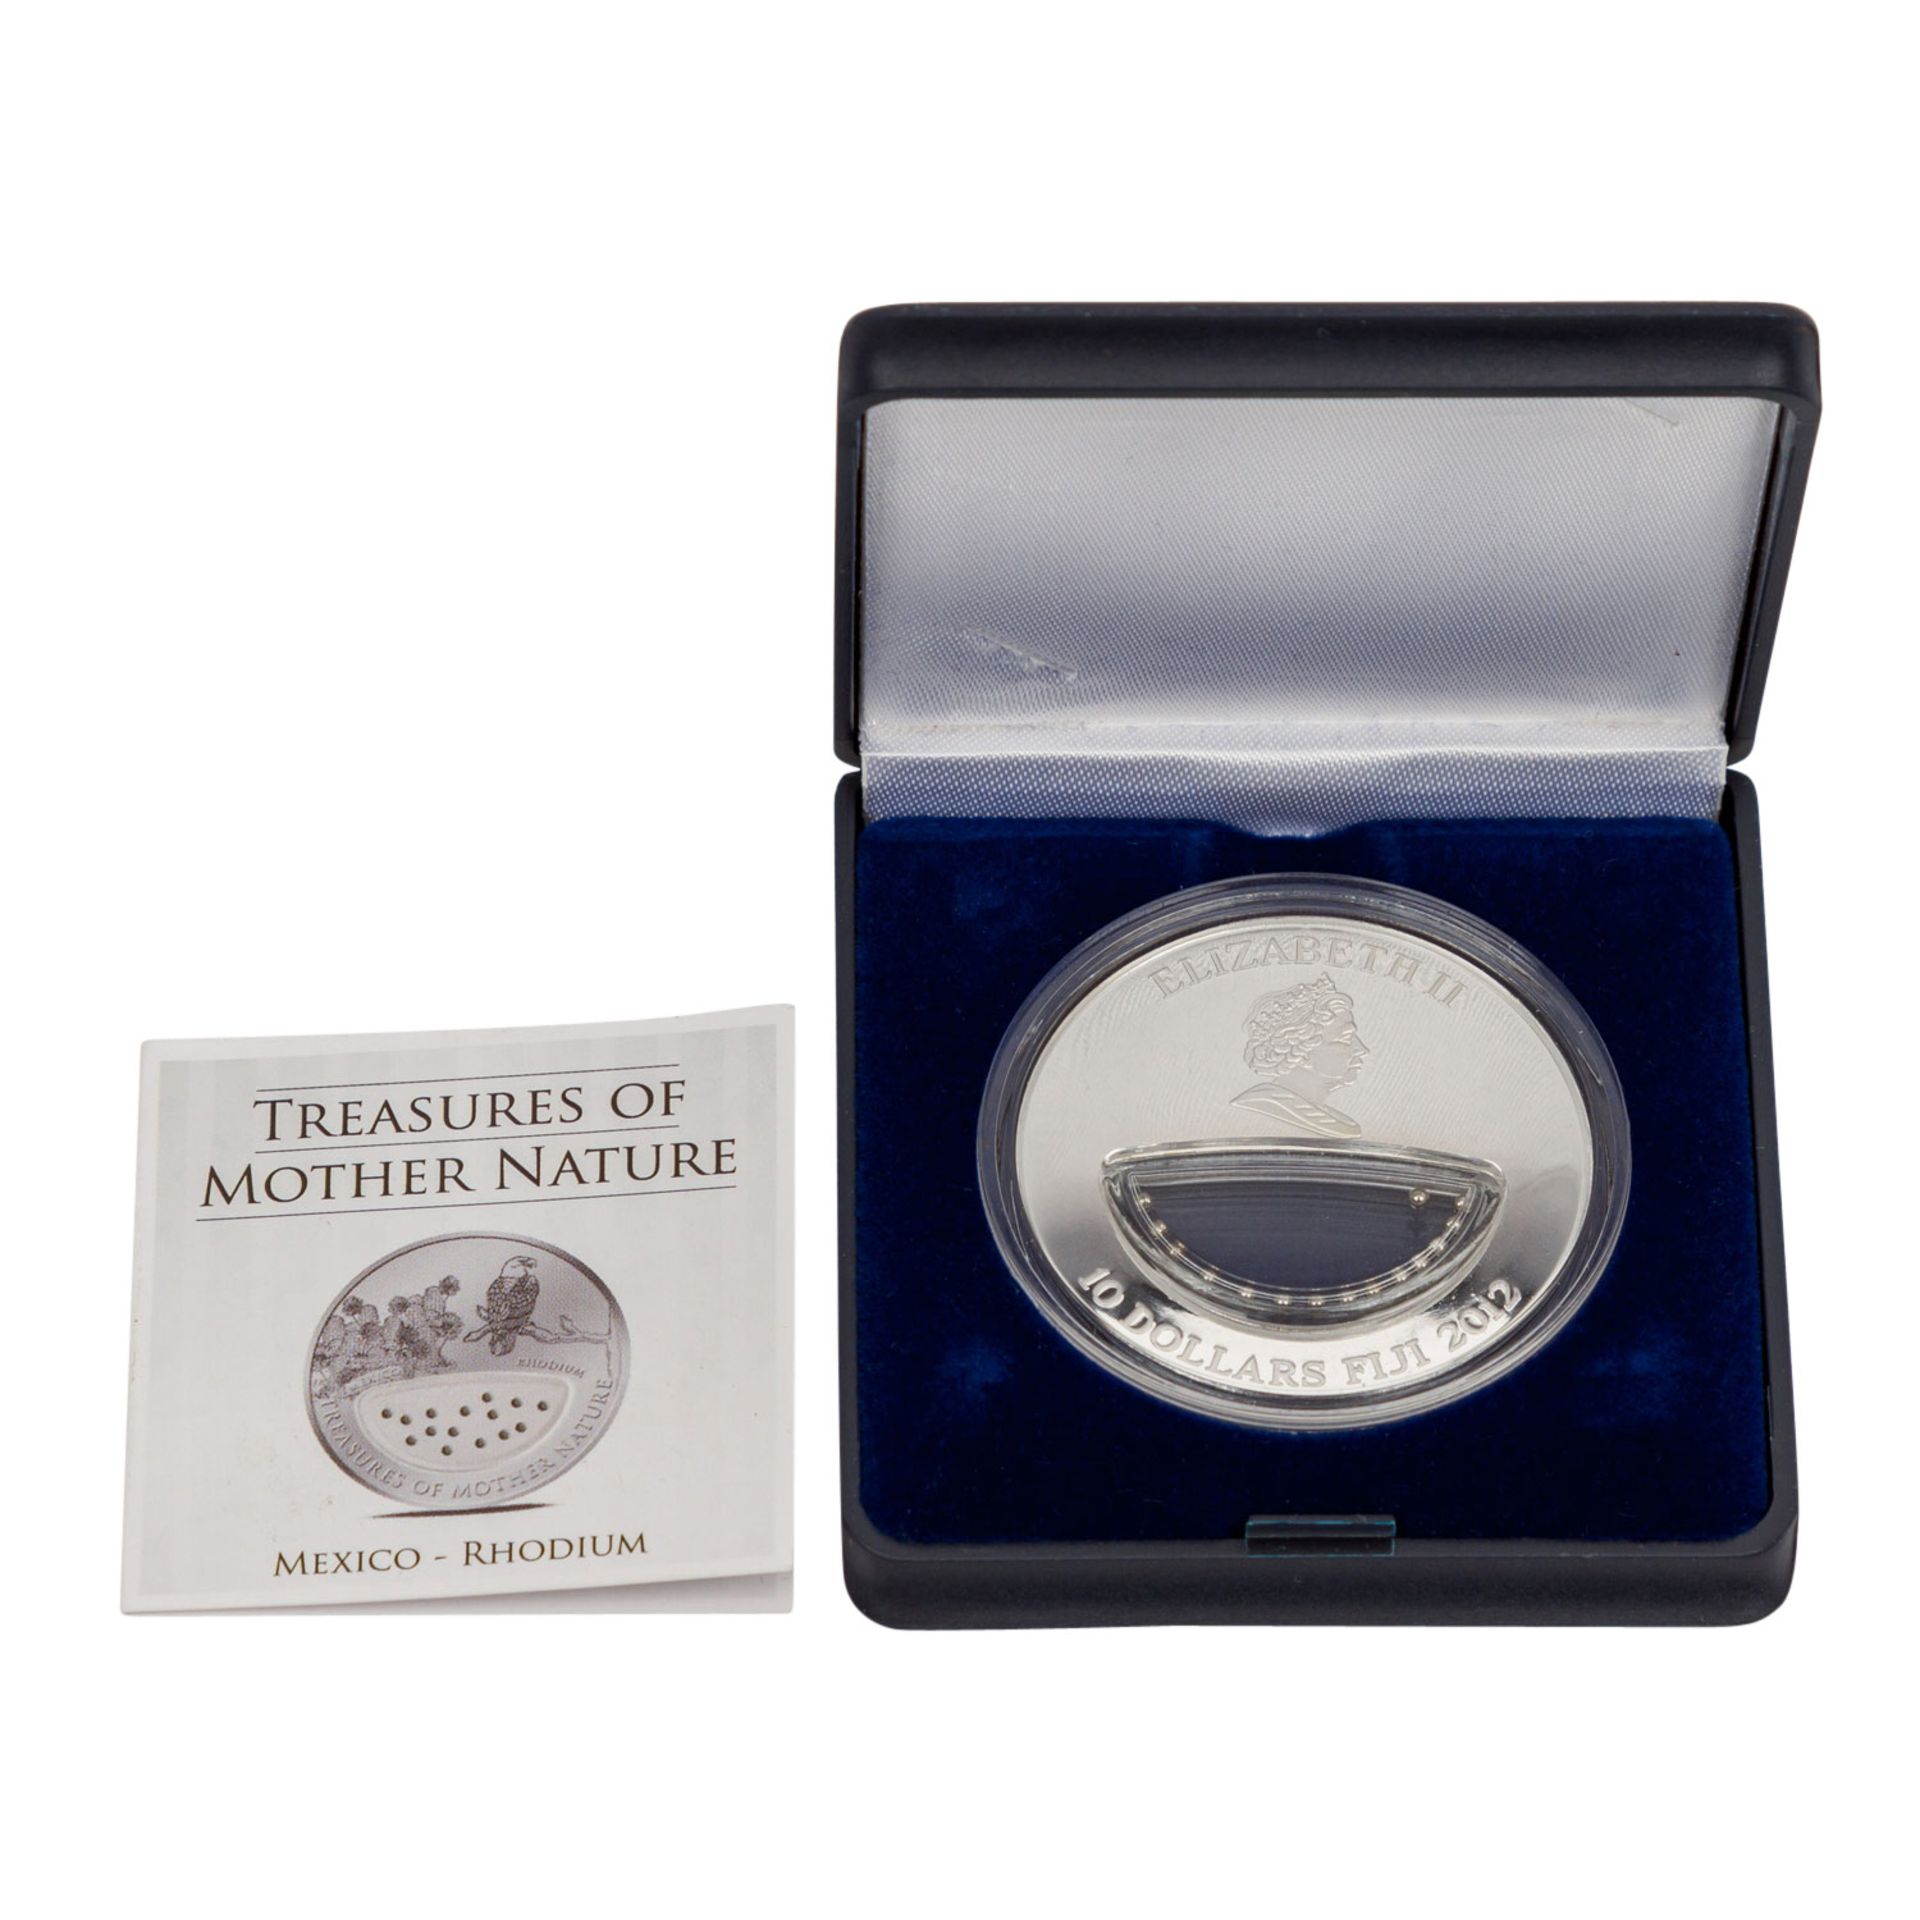 Rhodium Treasures of Mother Nature Proof Silver Coin 1 Fiji Dollar 2012. Vermutlich ha